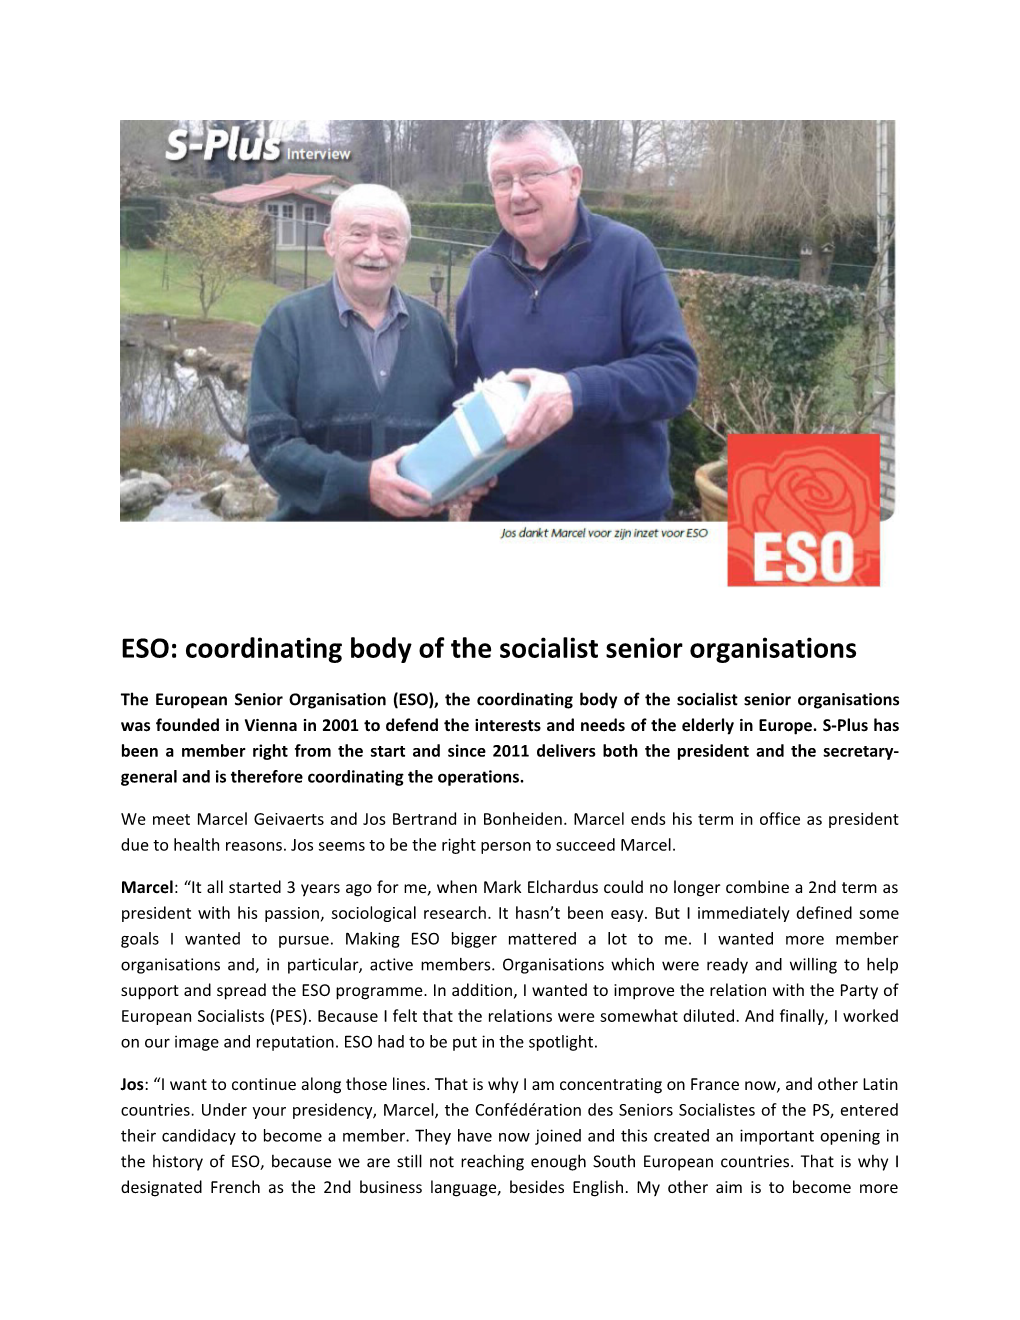 ESO: Coordinating Body of the Socialist Senior Organisations